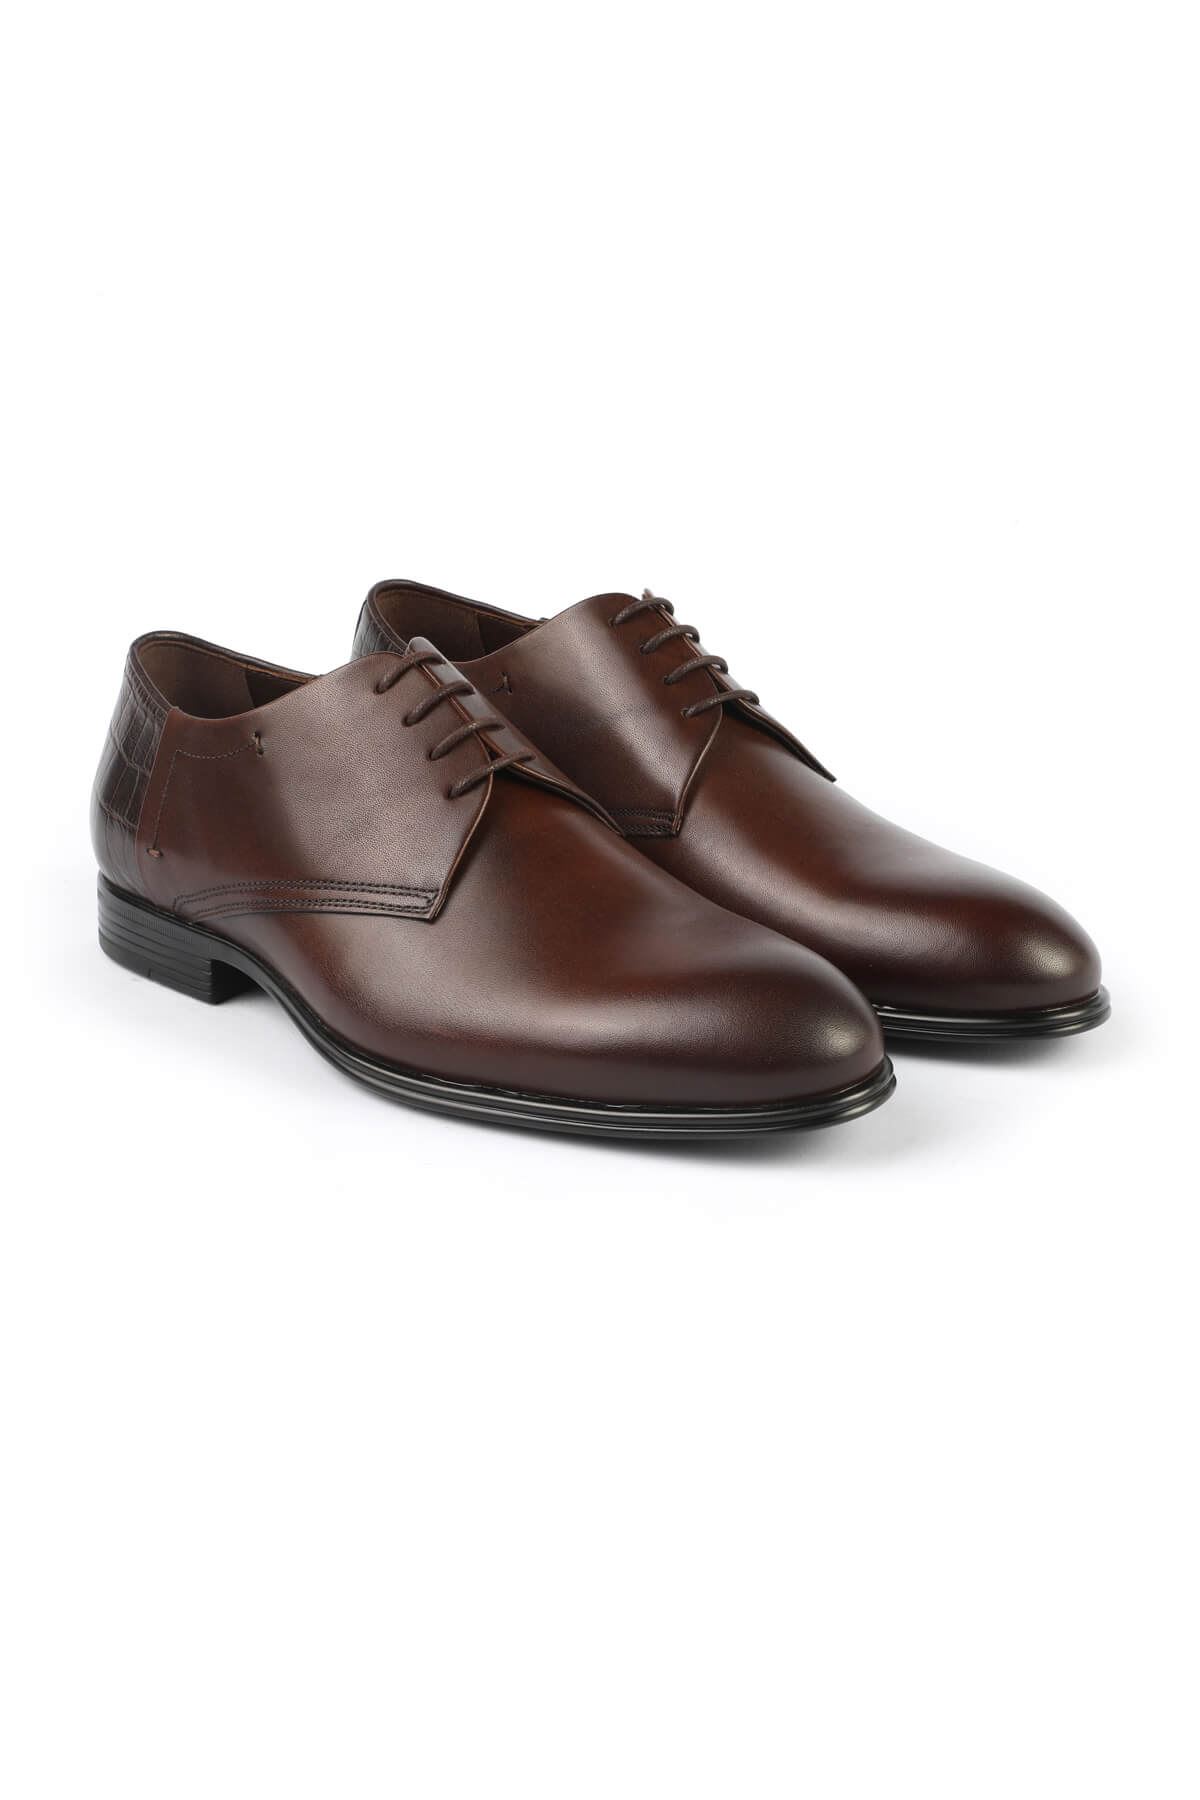 Libero 3111 Brown Classic Shoes